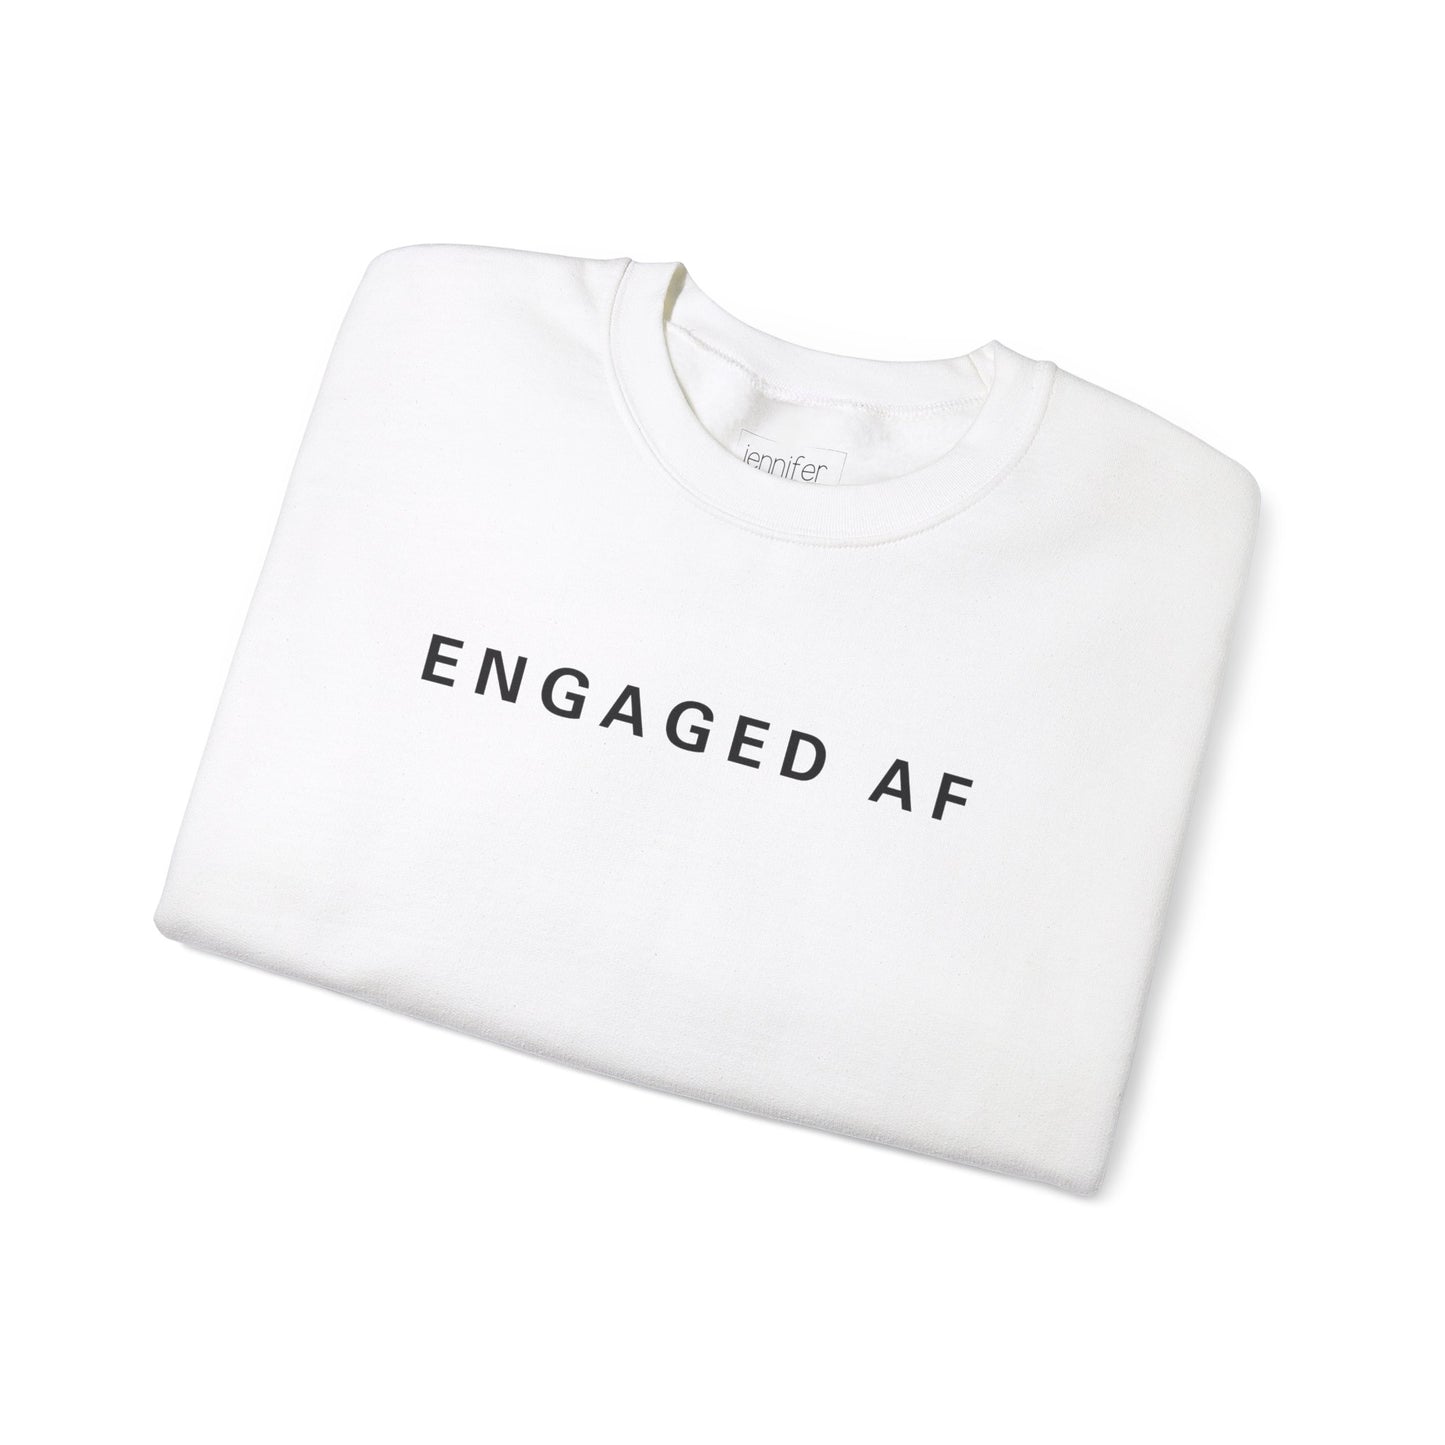 ENGAGED AF Crewneck Customizable Bridal Sweatshirt, Personalizes Sweatshirt with your new last name on the back